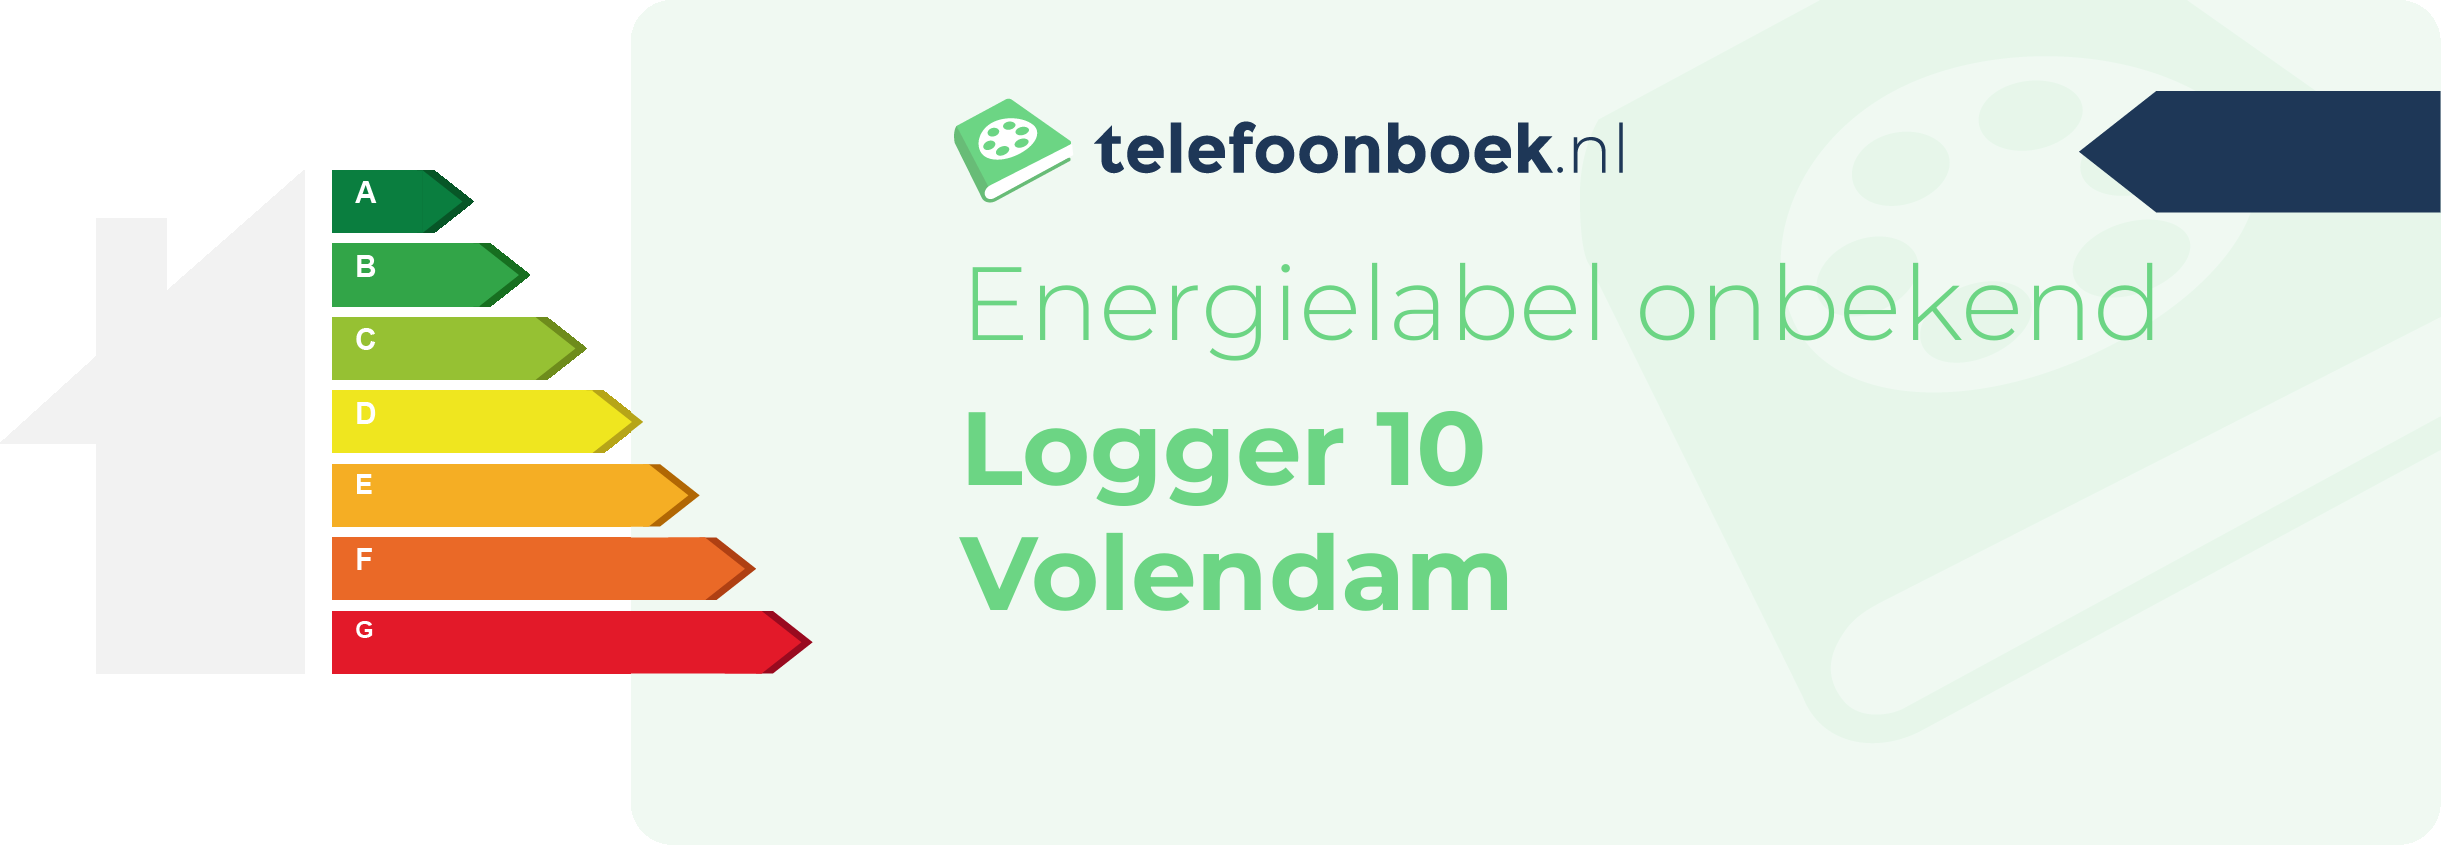 Energielabel Logger 10 Volendam